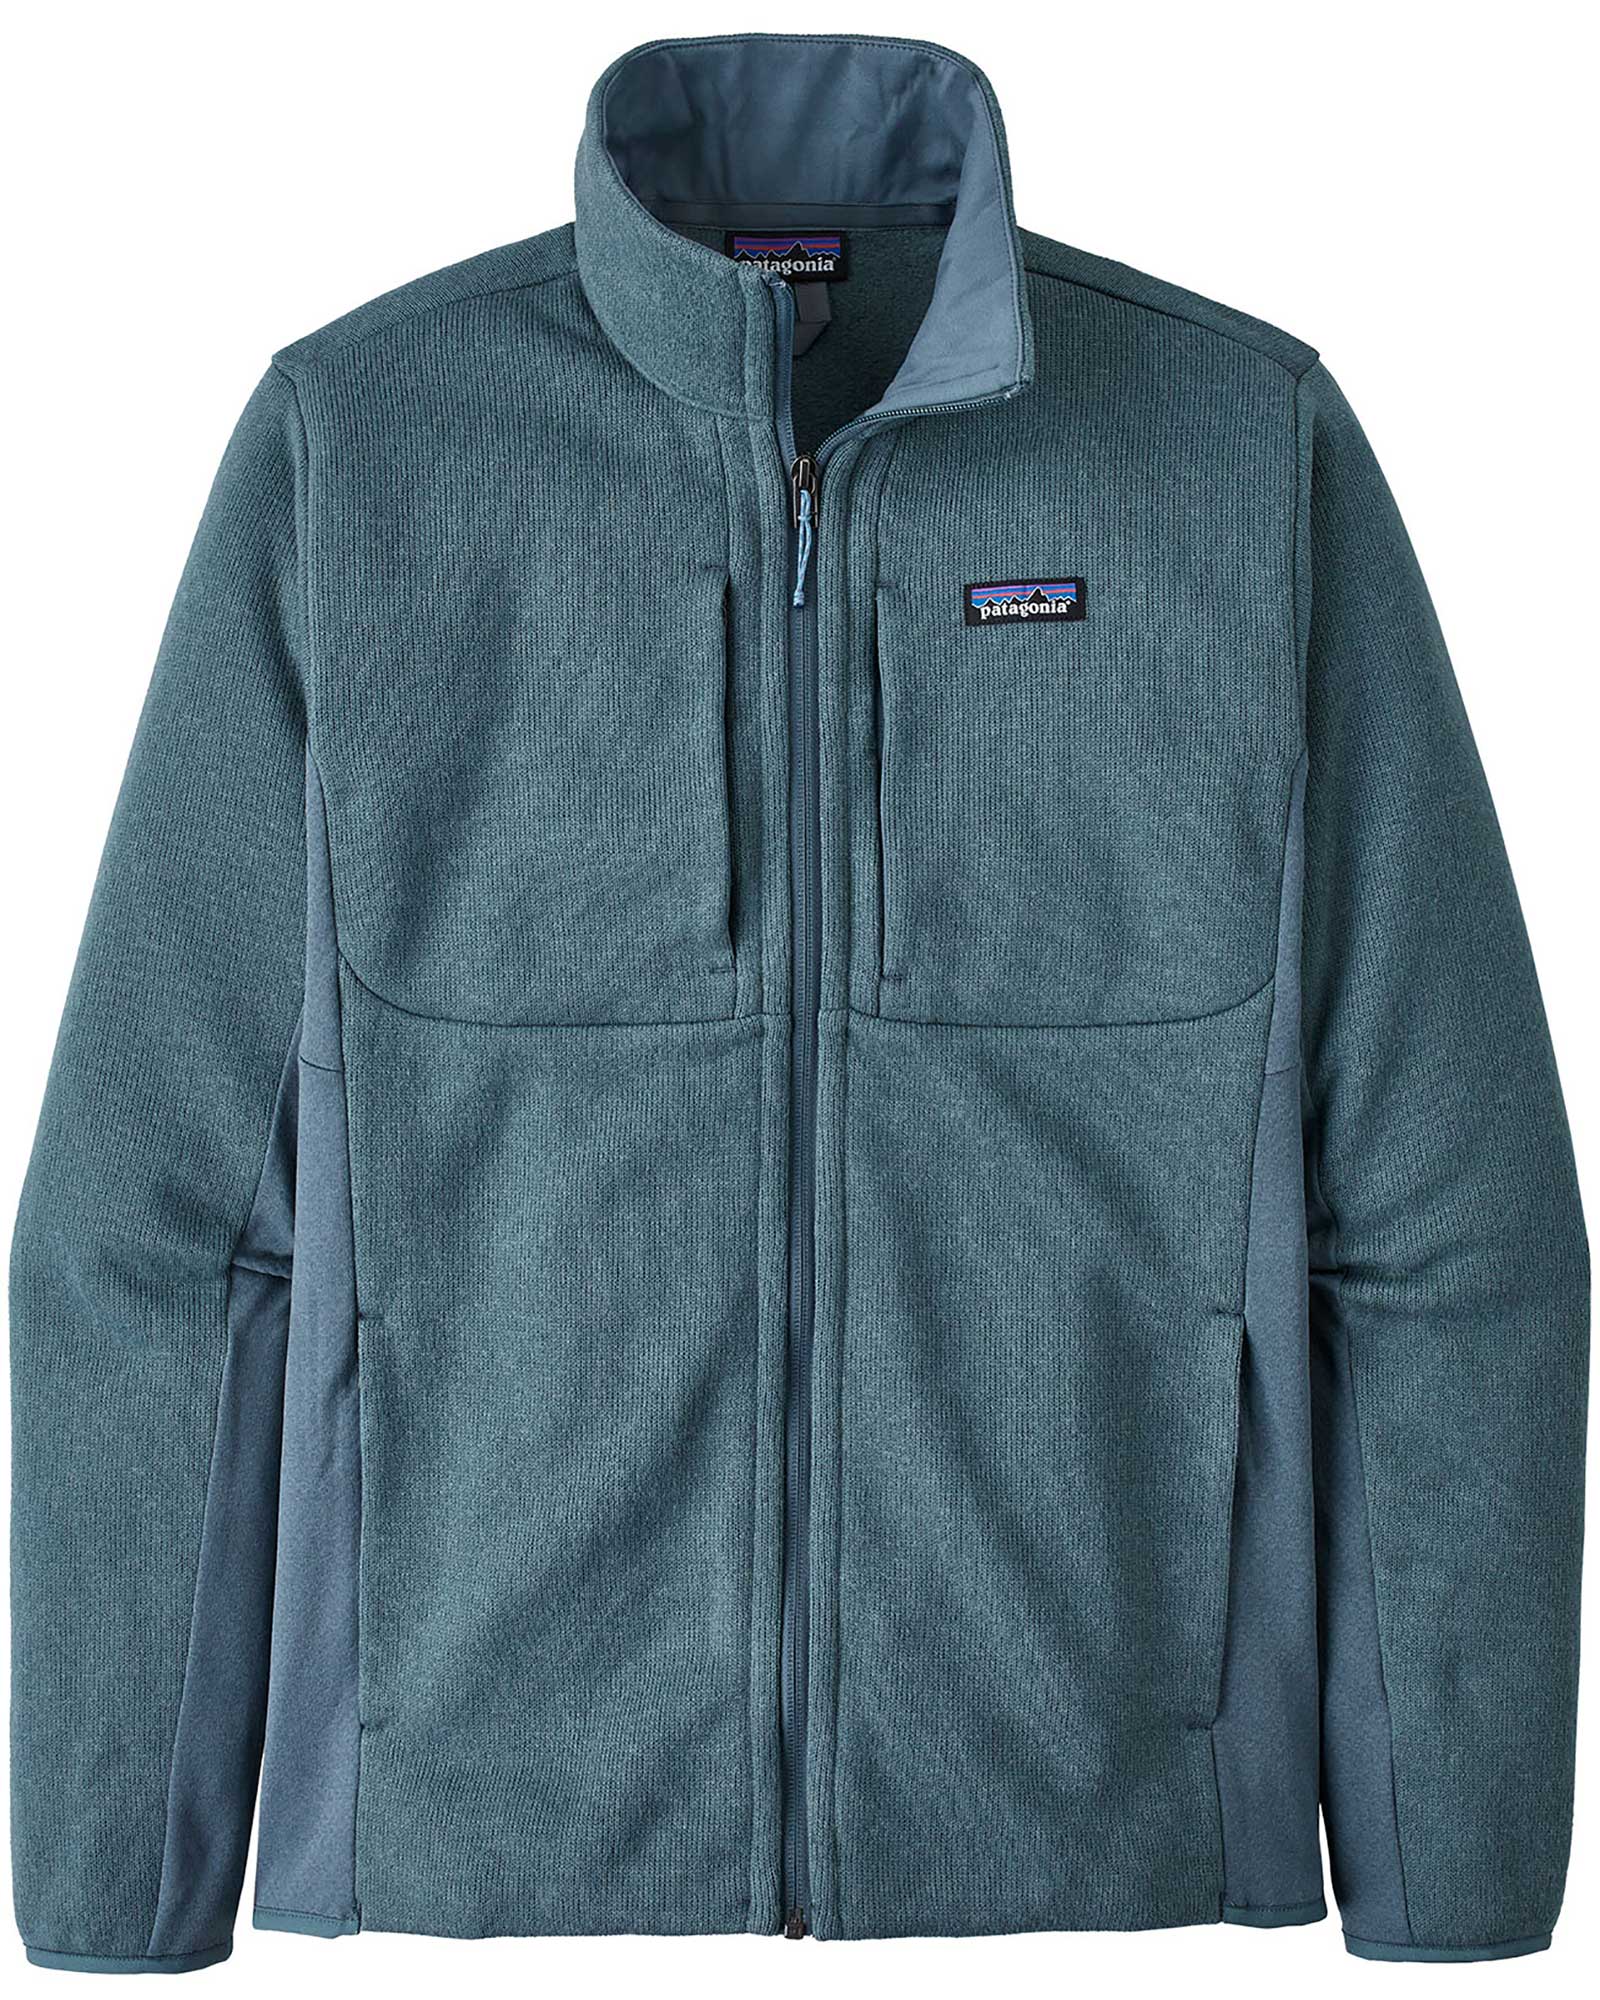 Patagonia Men's Lwt Better Sweater Jacket | Ellis Brigham